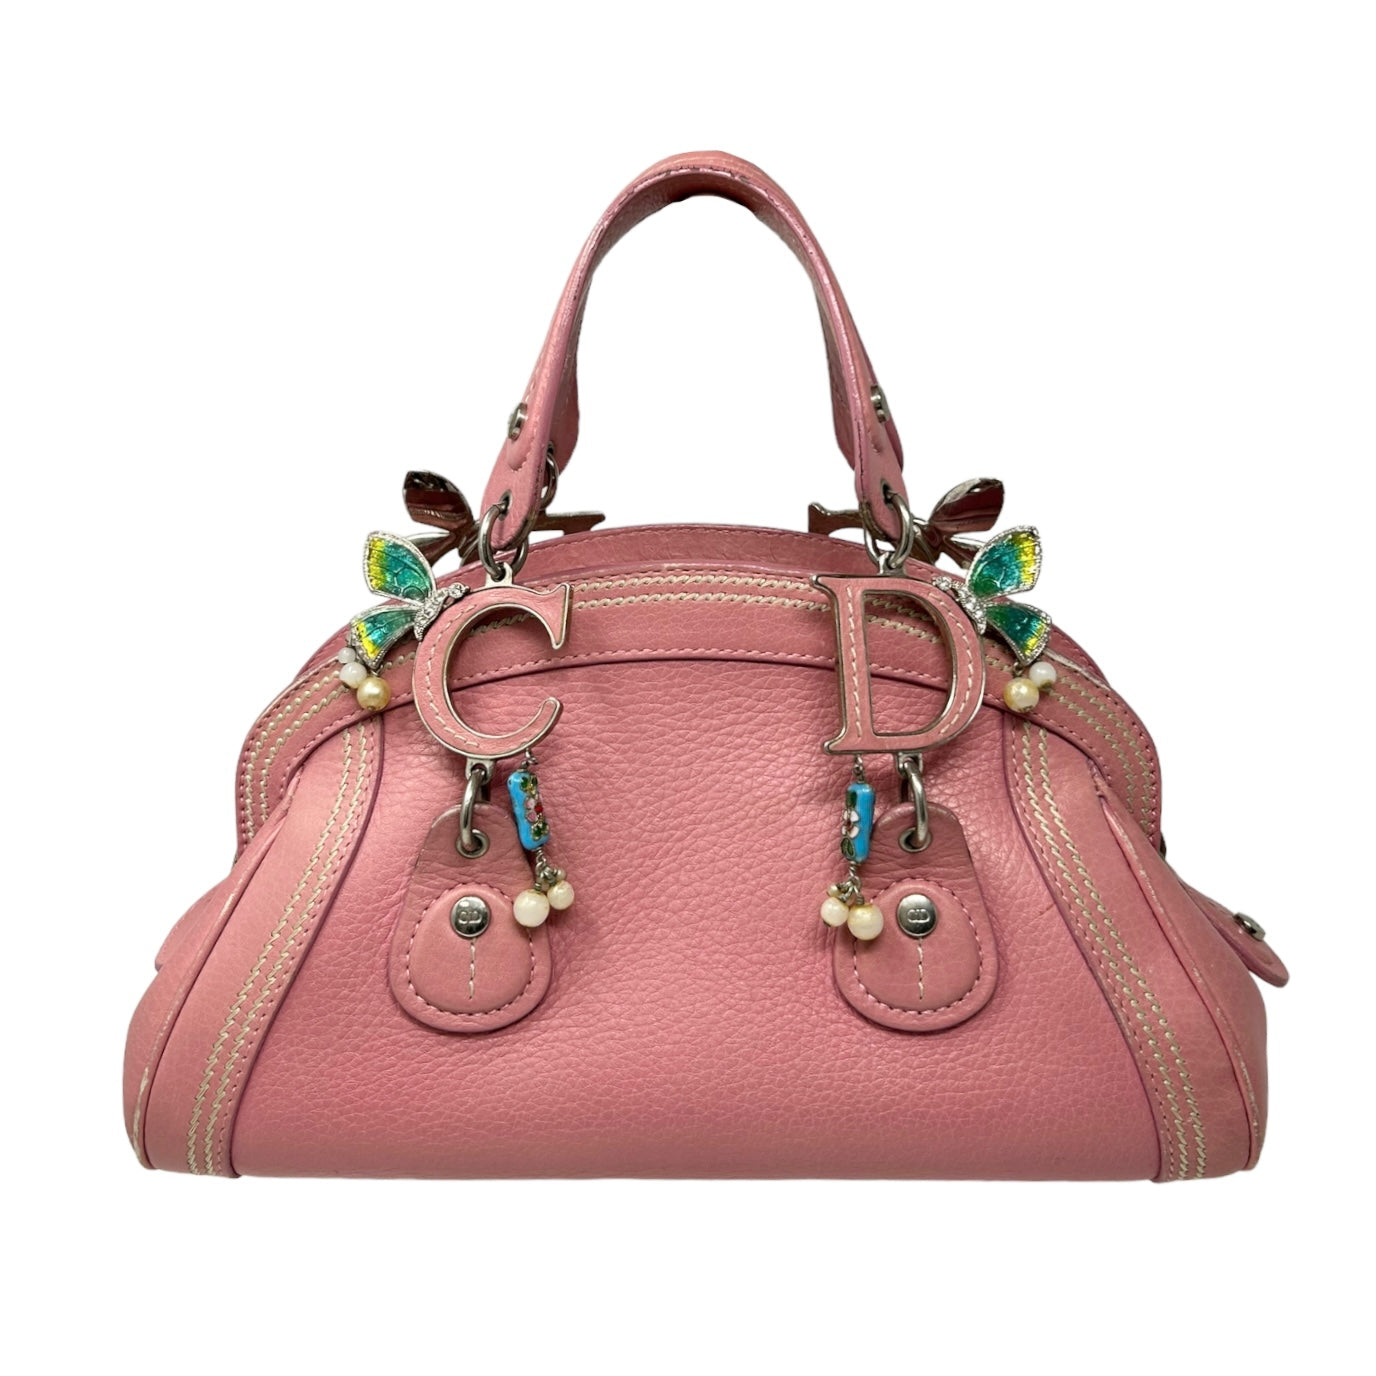 Détective leather satchel Dior Multicolour in Leather - 23368593